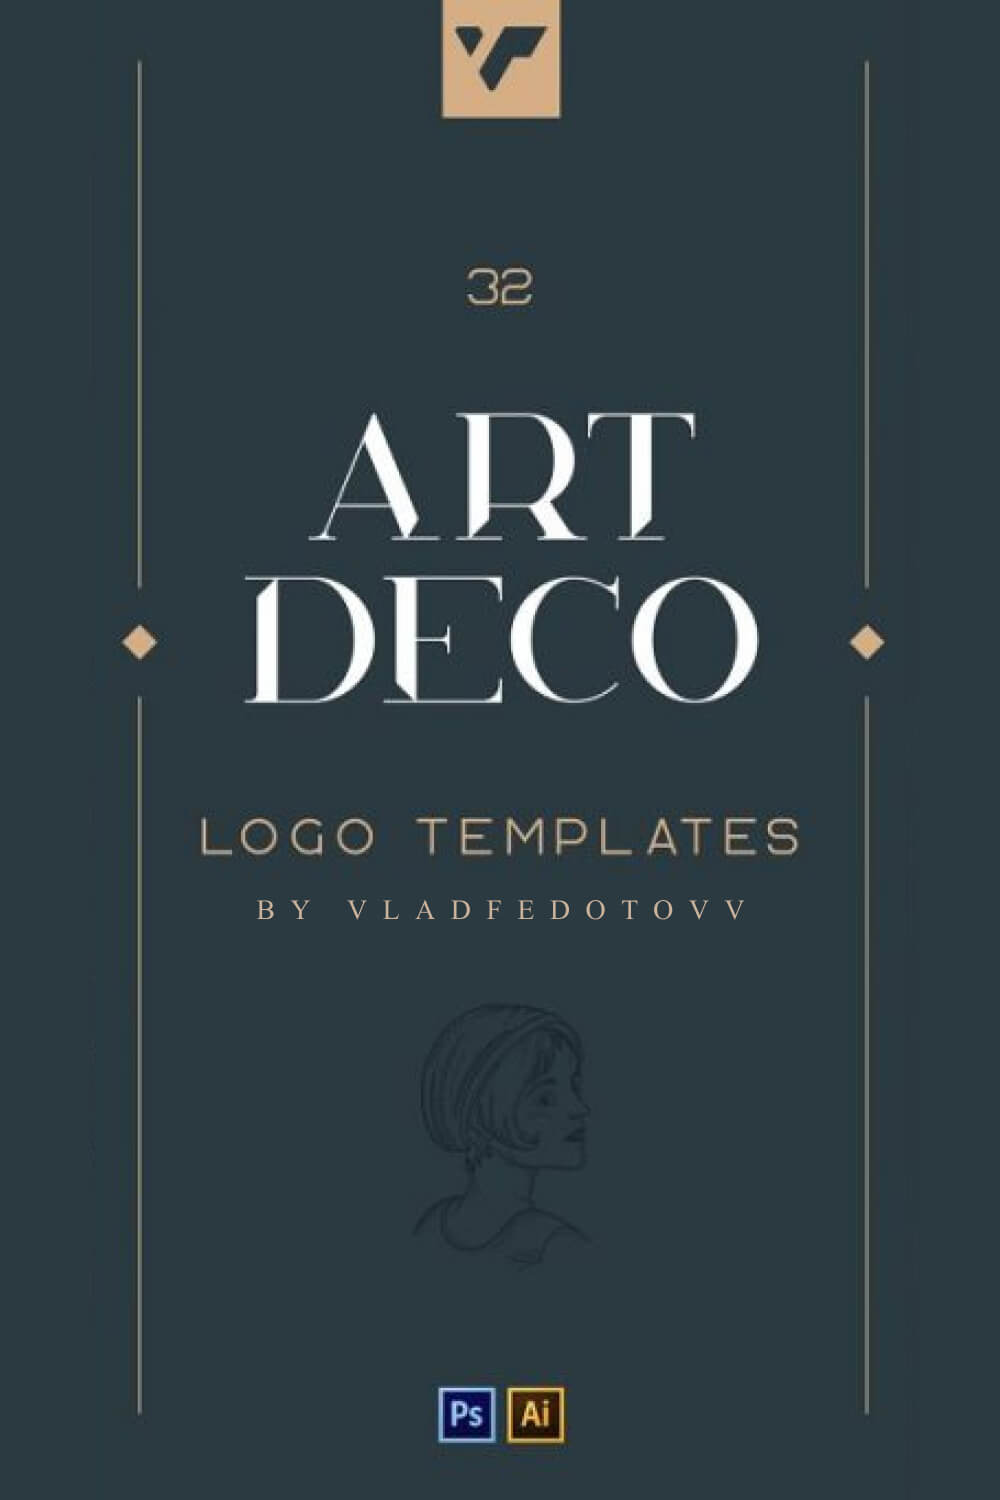 Art Deco Logo Templates 1100 x 1100 pinterest image.